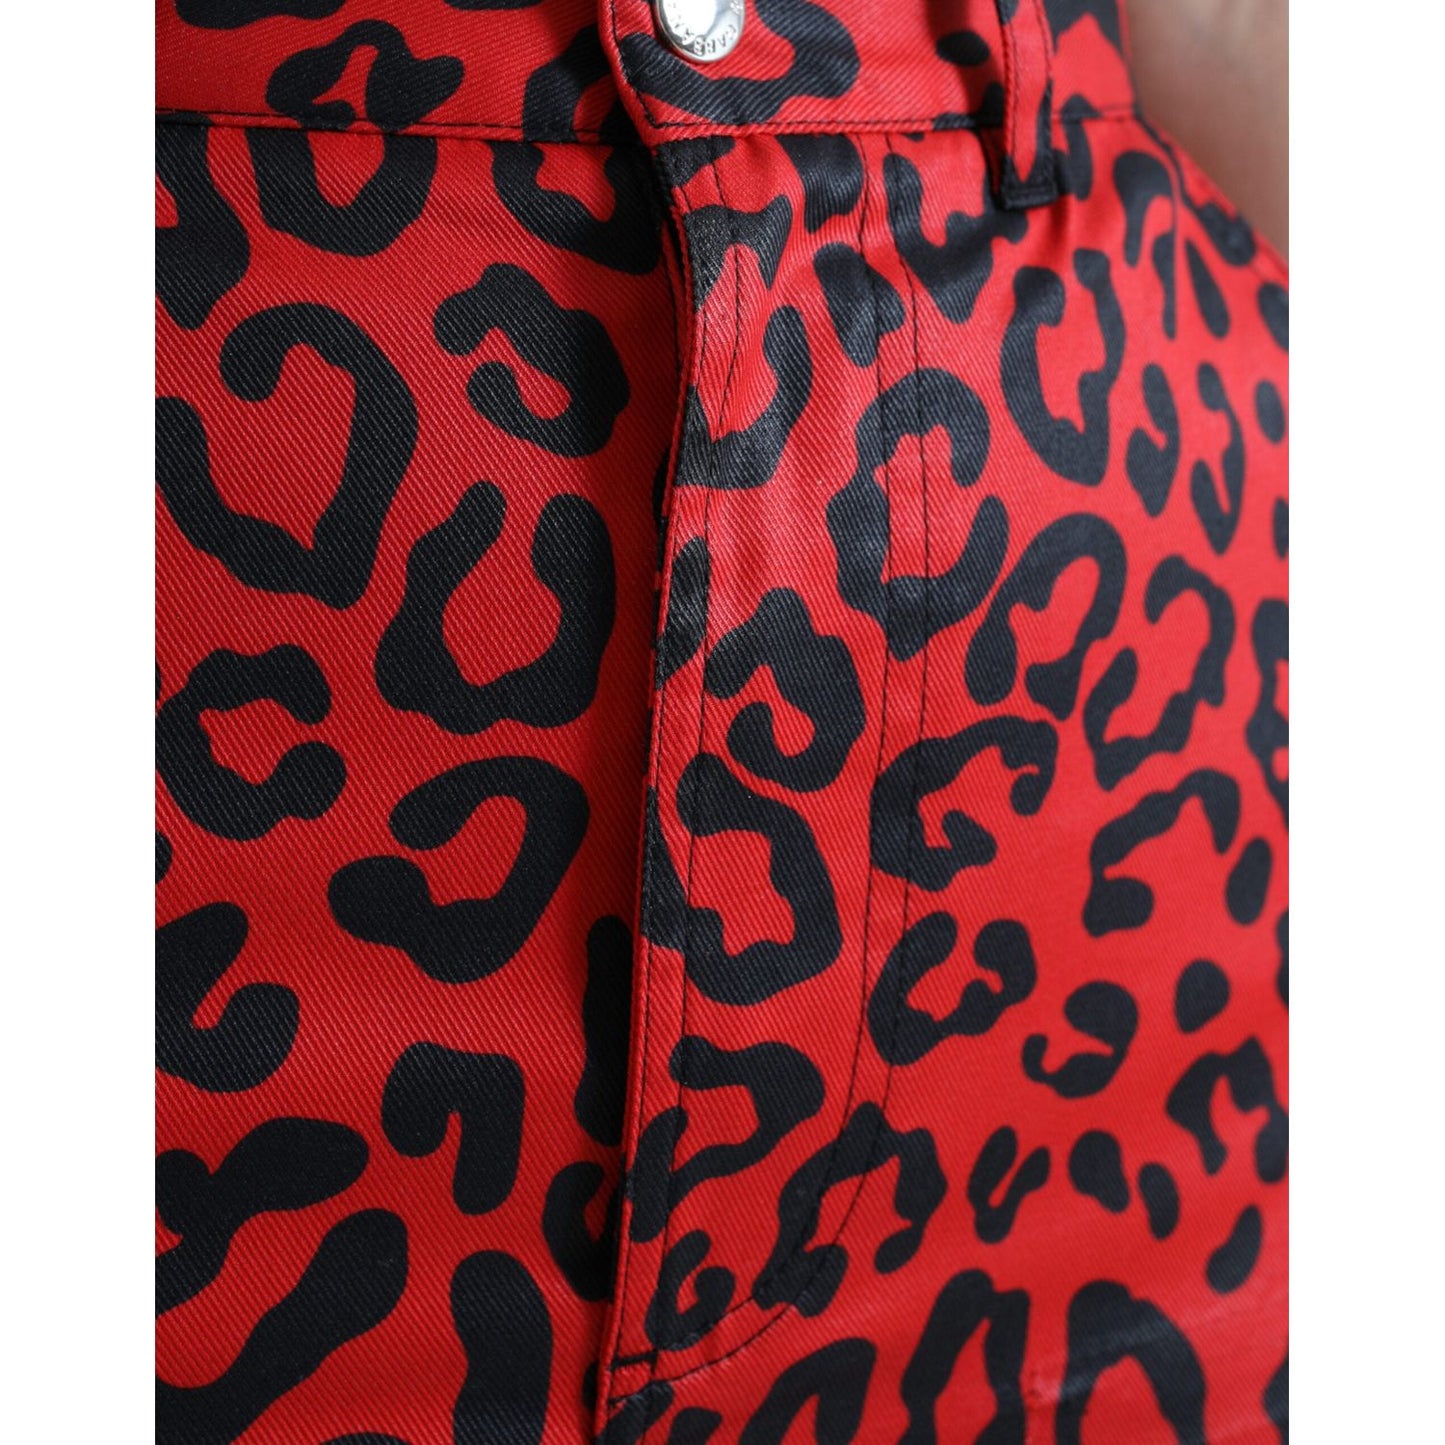 Dolce & Gabbana High Waist Red Leopard Mini Skirt red-leopard-print-cotton-high-waist-mini-skirt 465A1097-BG-scaled-3a557f3d-cad.jpg